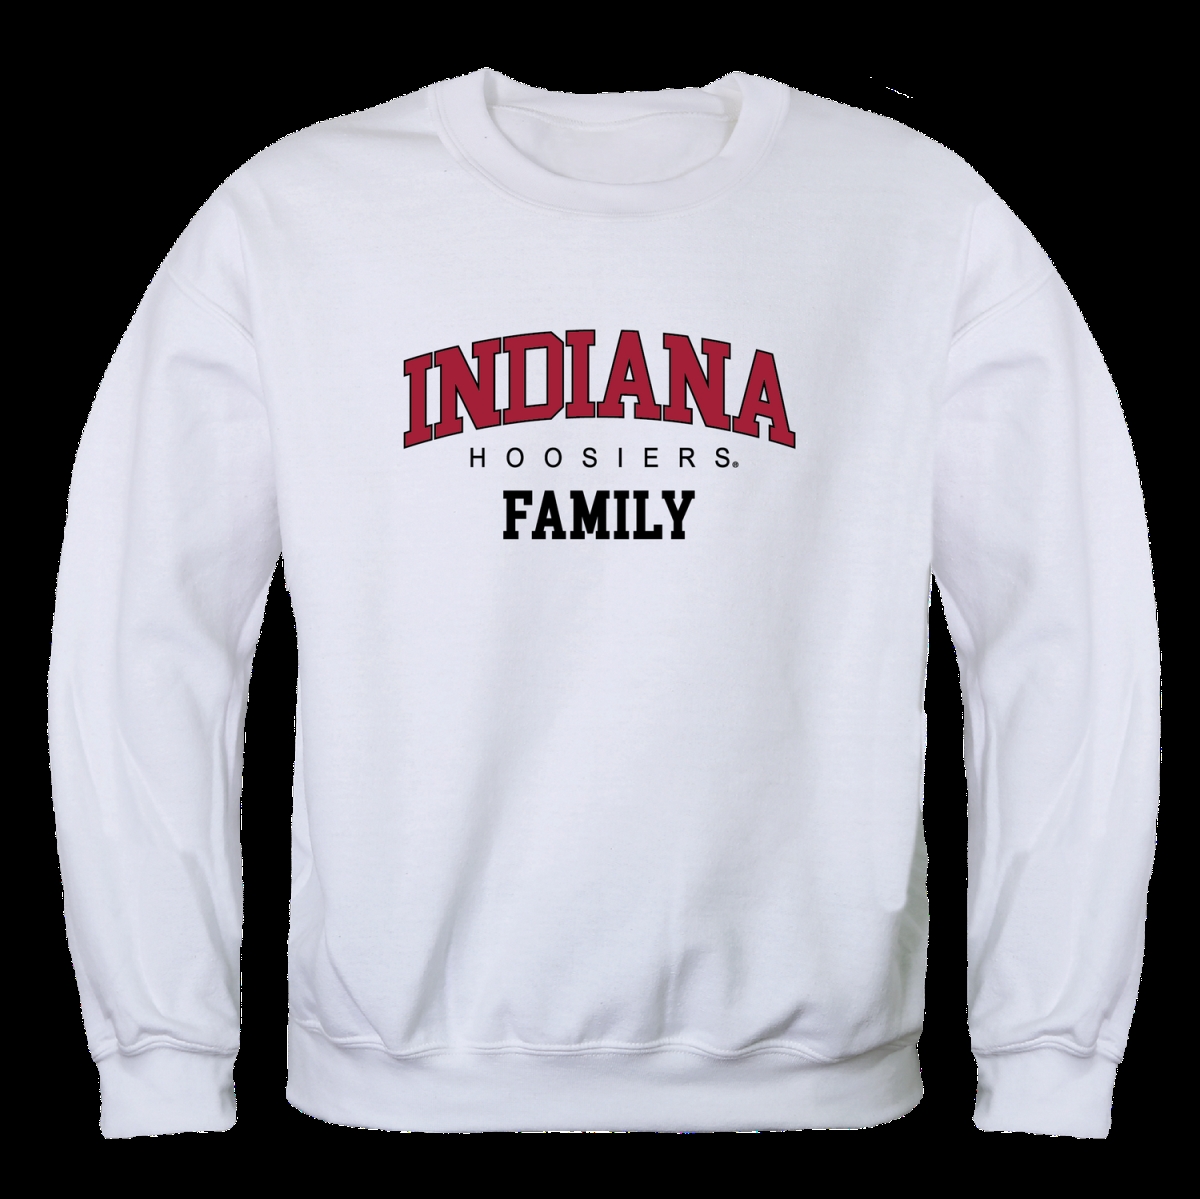 W Republic 572-737-WHT-02 Indiana University Hoosiers Family Crewneck Sweatshirt&#44; White - Medium